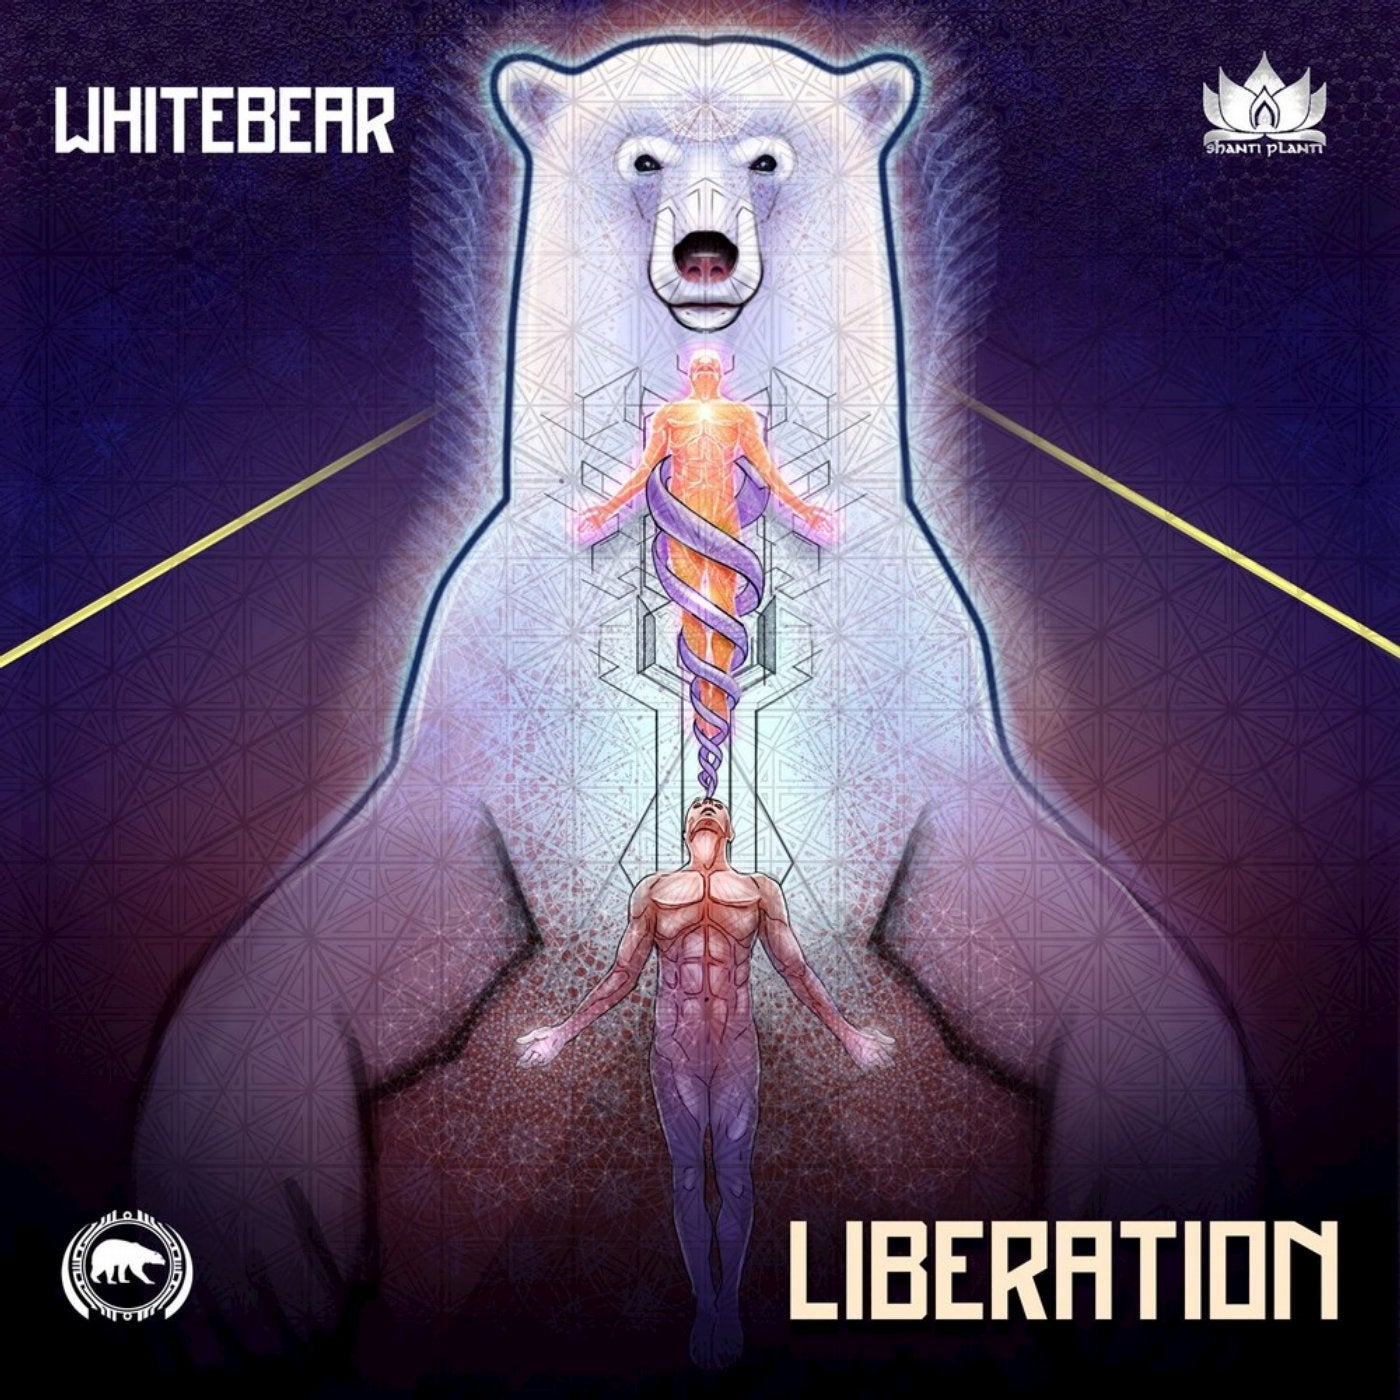 Liberation